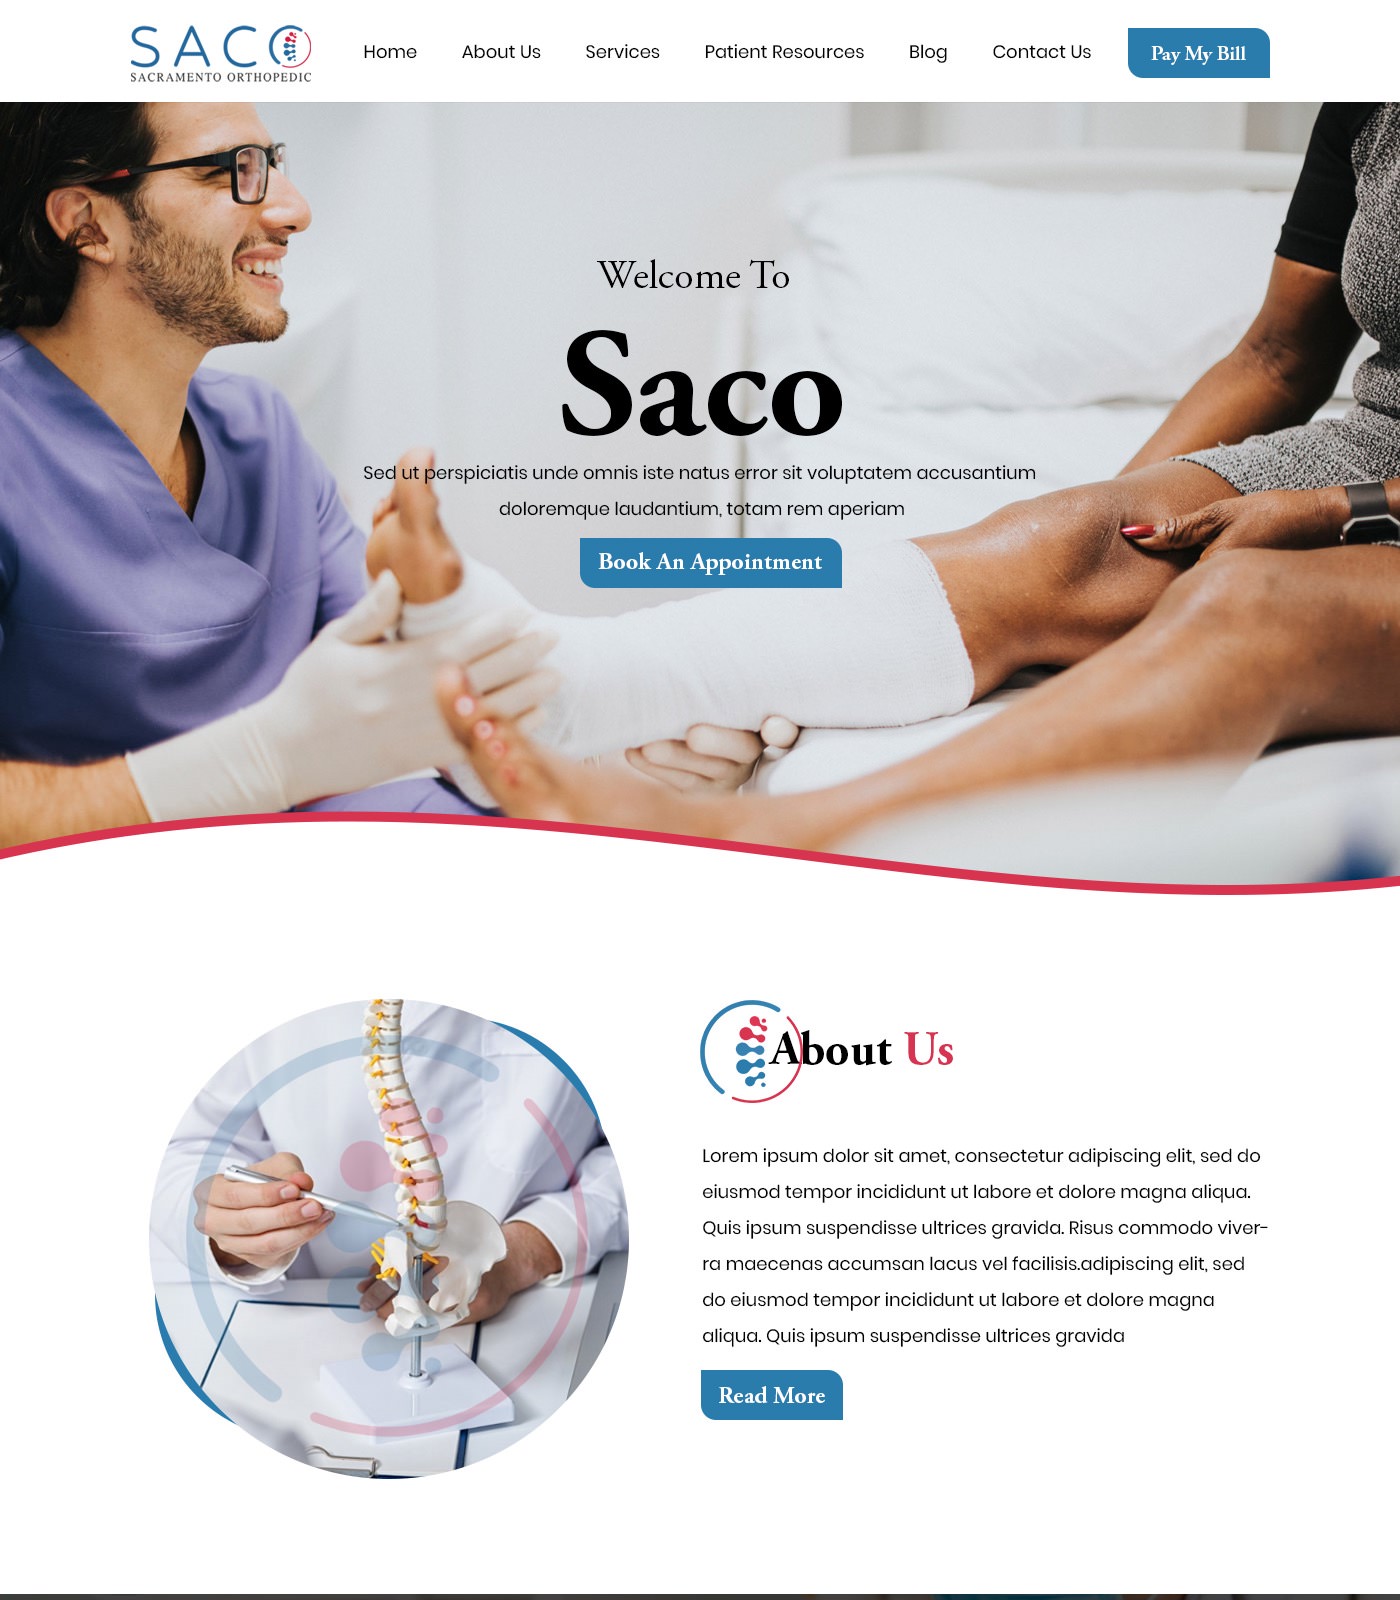 Healthcare website design example